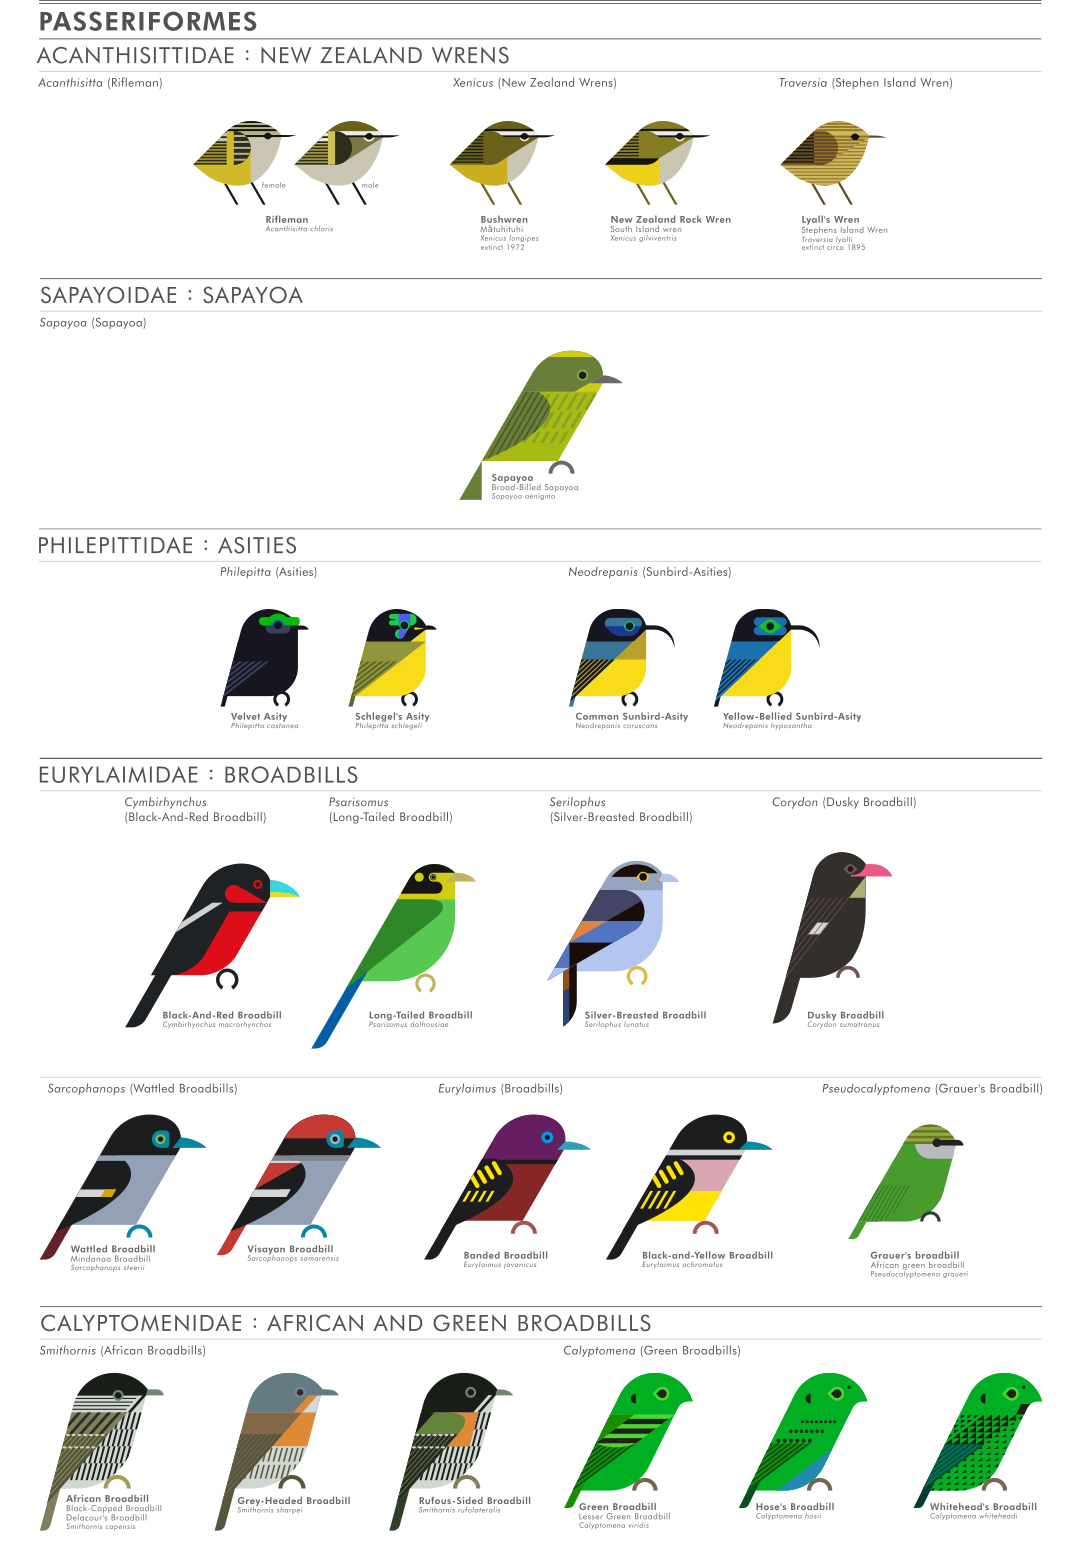 scott partridge - ave - avian vector encyclopedia - new zealand wrens ACANTHISITTIDAE - bird vector art